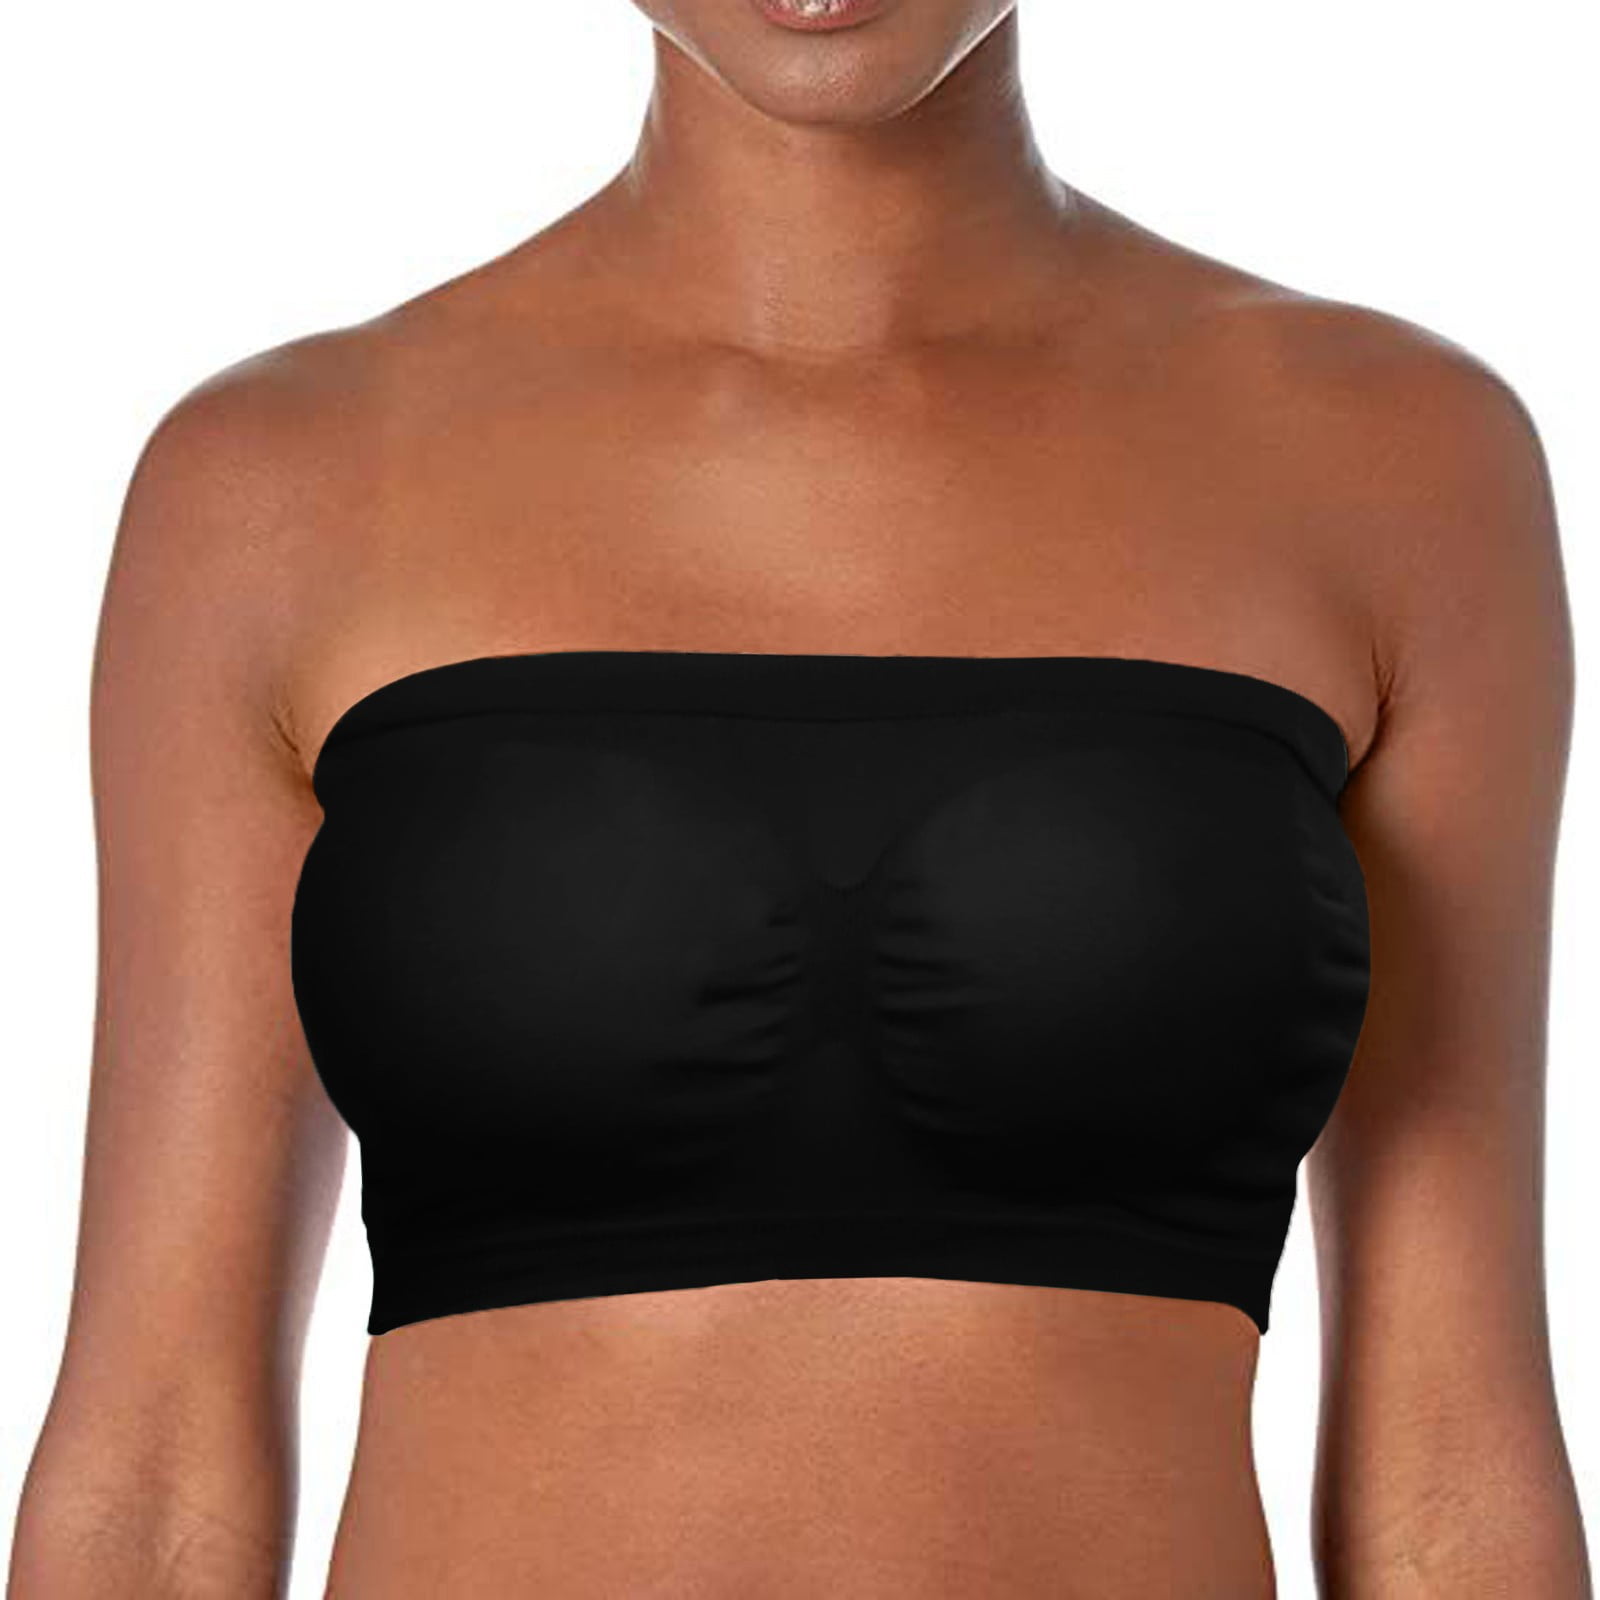 Buy Softwrap Bandeau Bra Strapless Bras for Women Comfort Wireless Push Up  Bandeau Tube Top Padded Bralette (36, Black) at